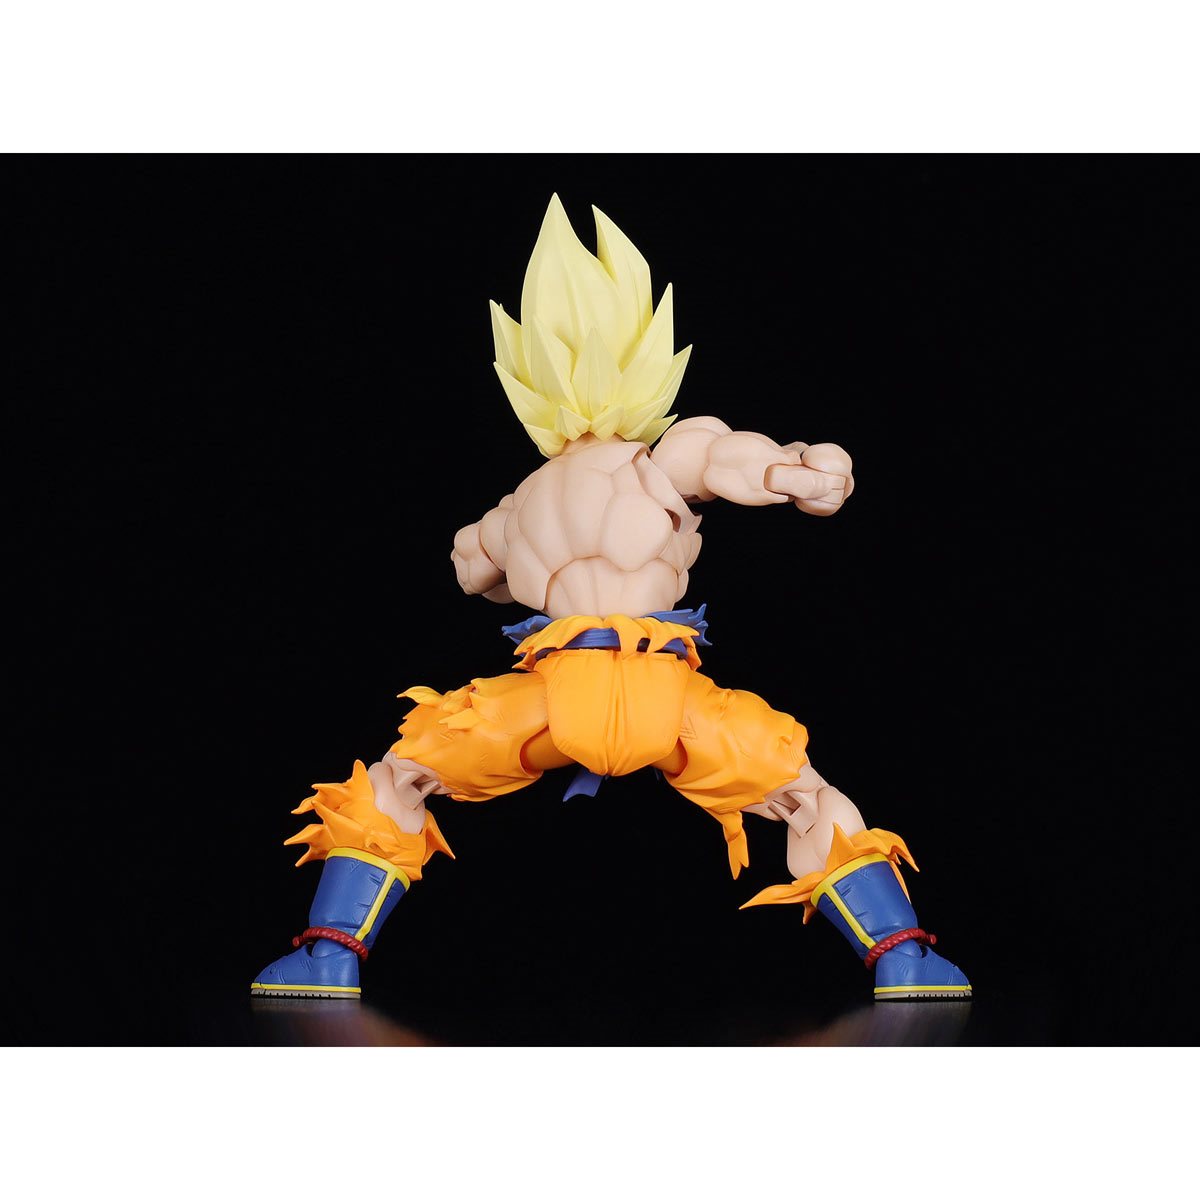 Dragon Ball Z Super Saiyan Goku Legendary Super Saiyan S.H.Figuarts Figure by Bandai -Tamashii Nations - India - www.superherotoystore.com